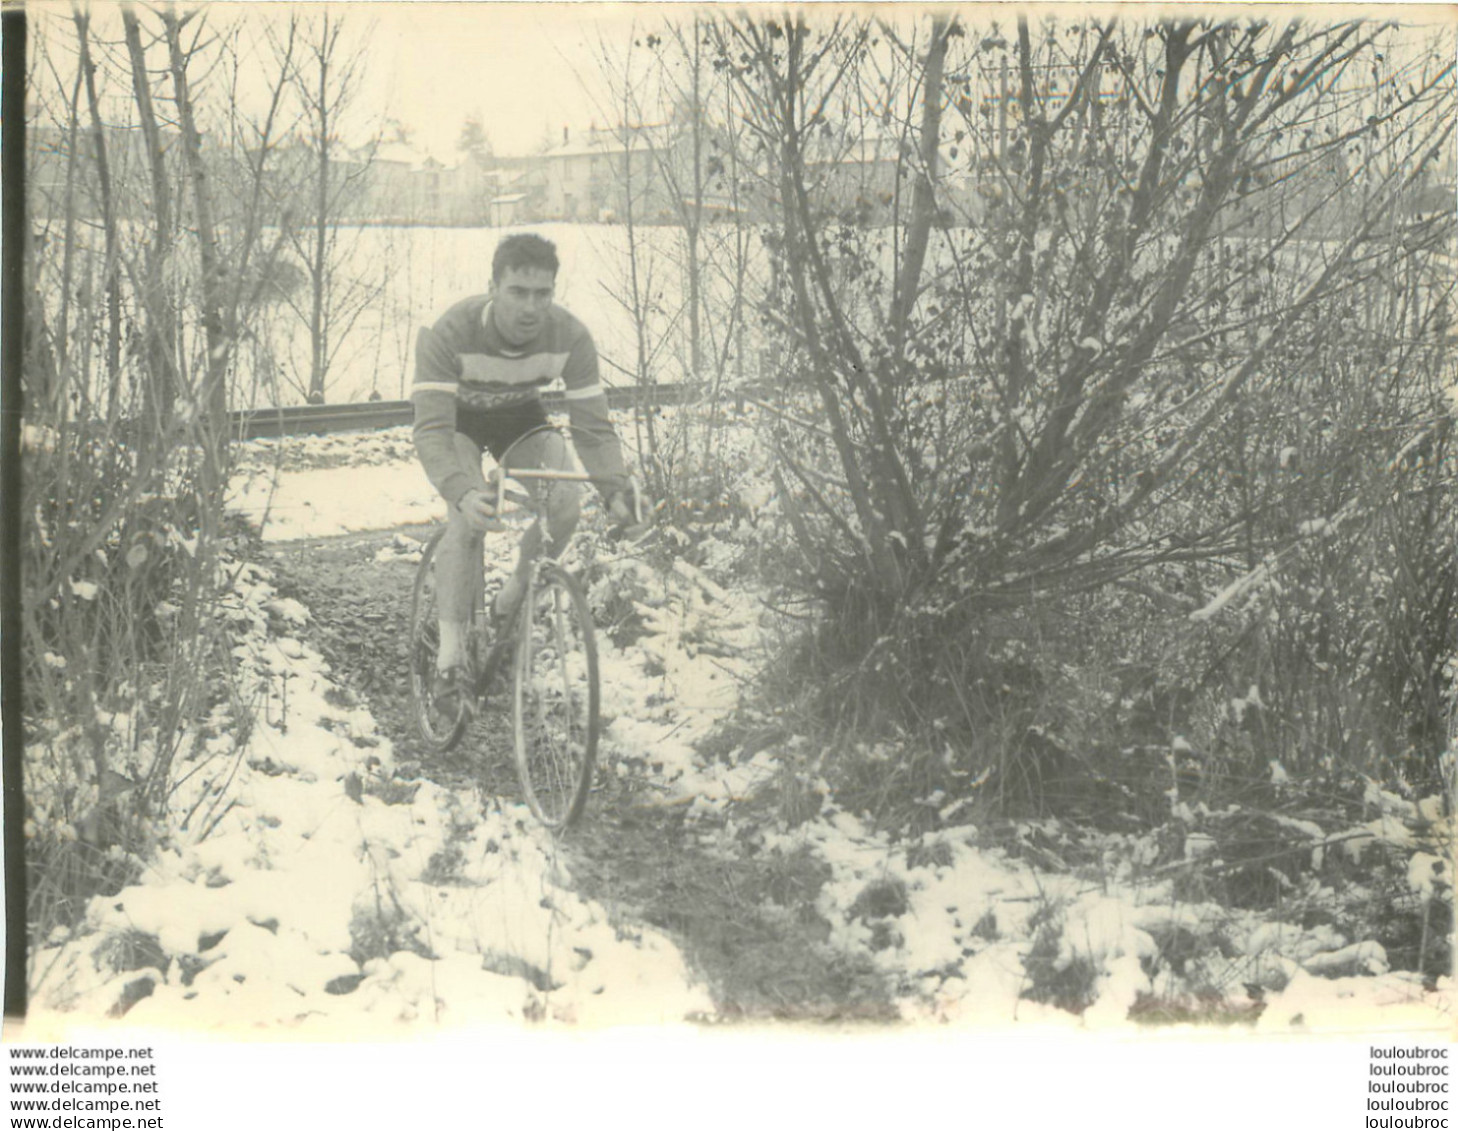 CYCLISME CYCLO CROSS 1965 LES ABRETS ISERE PHOTO ORIGINALE 18 X 13   CM Ref7 - Sporten